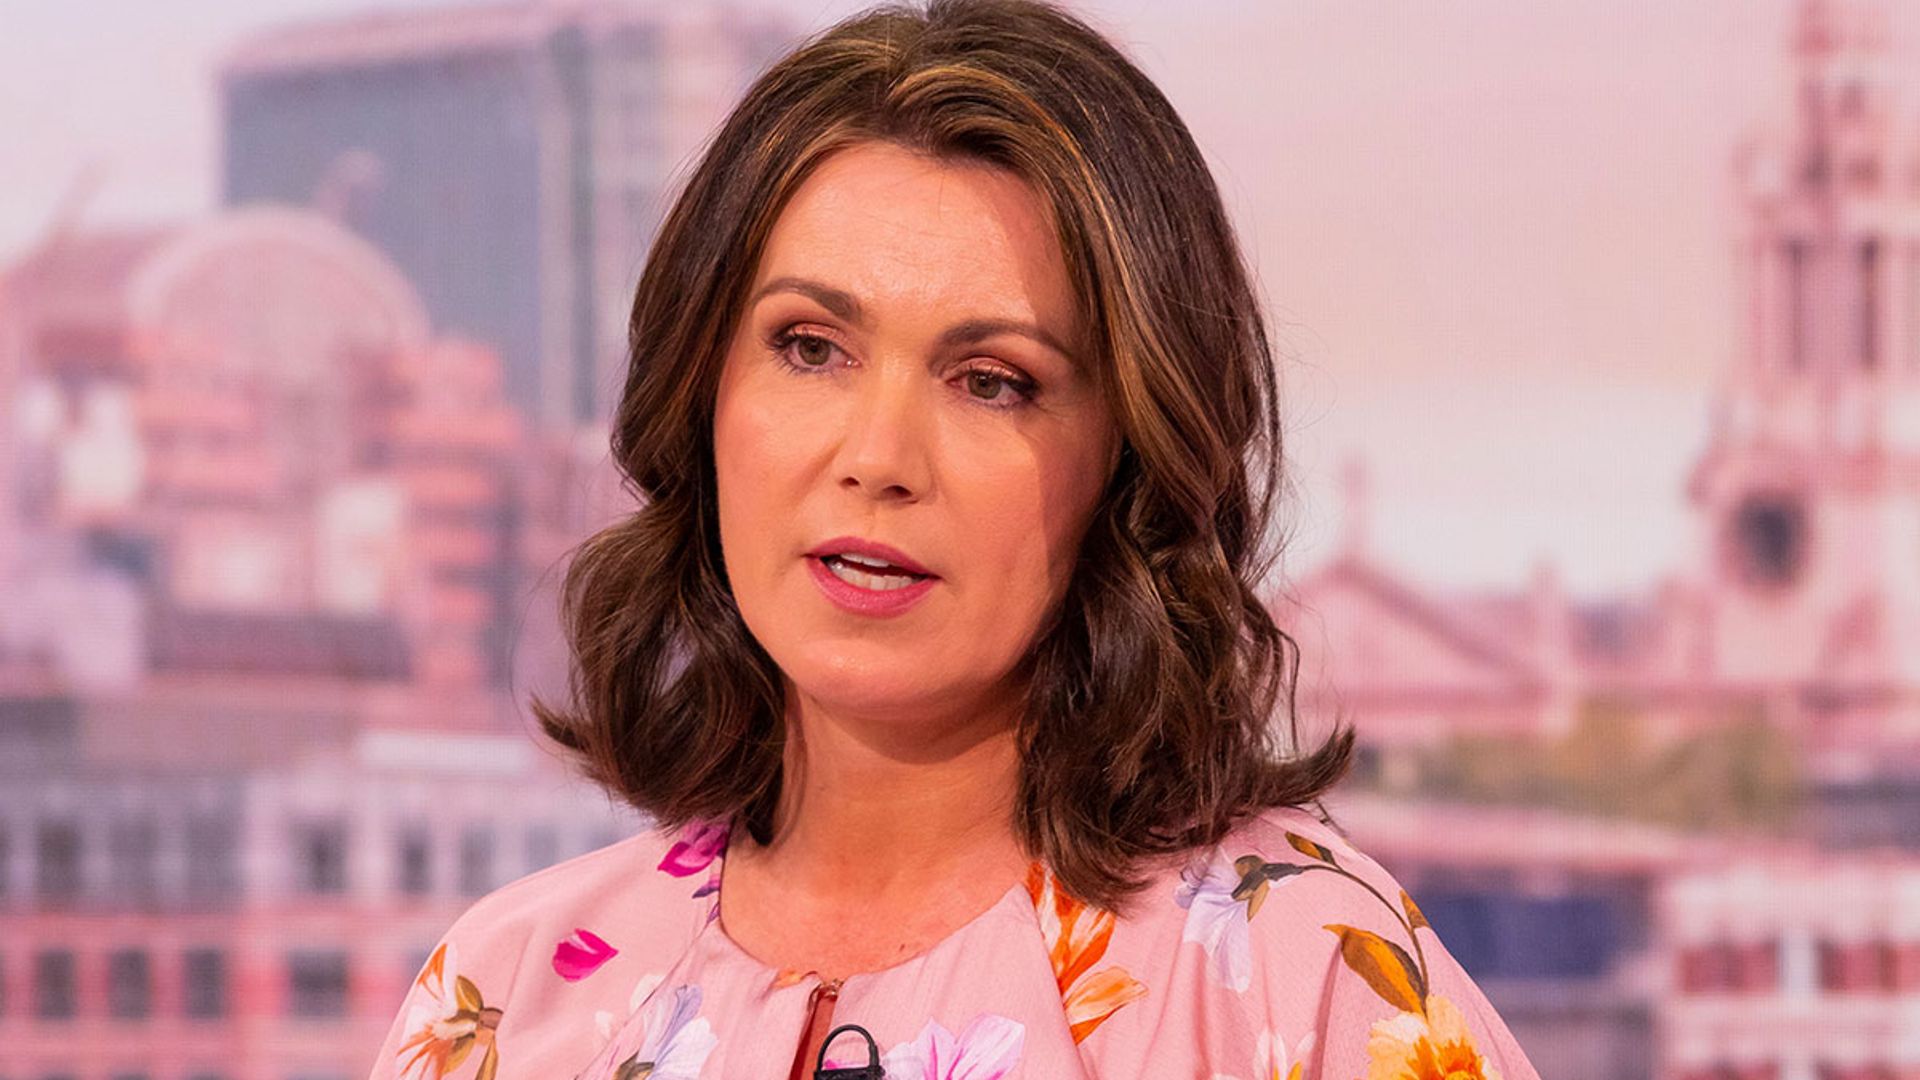 Susanna Reid breaks down in tears during Good Morning Britain interview